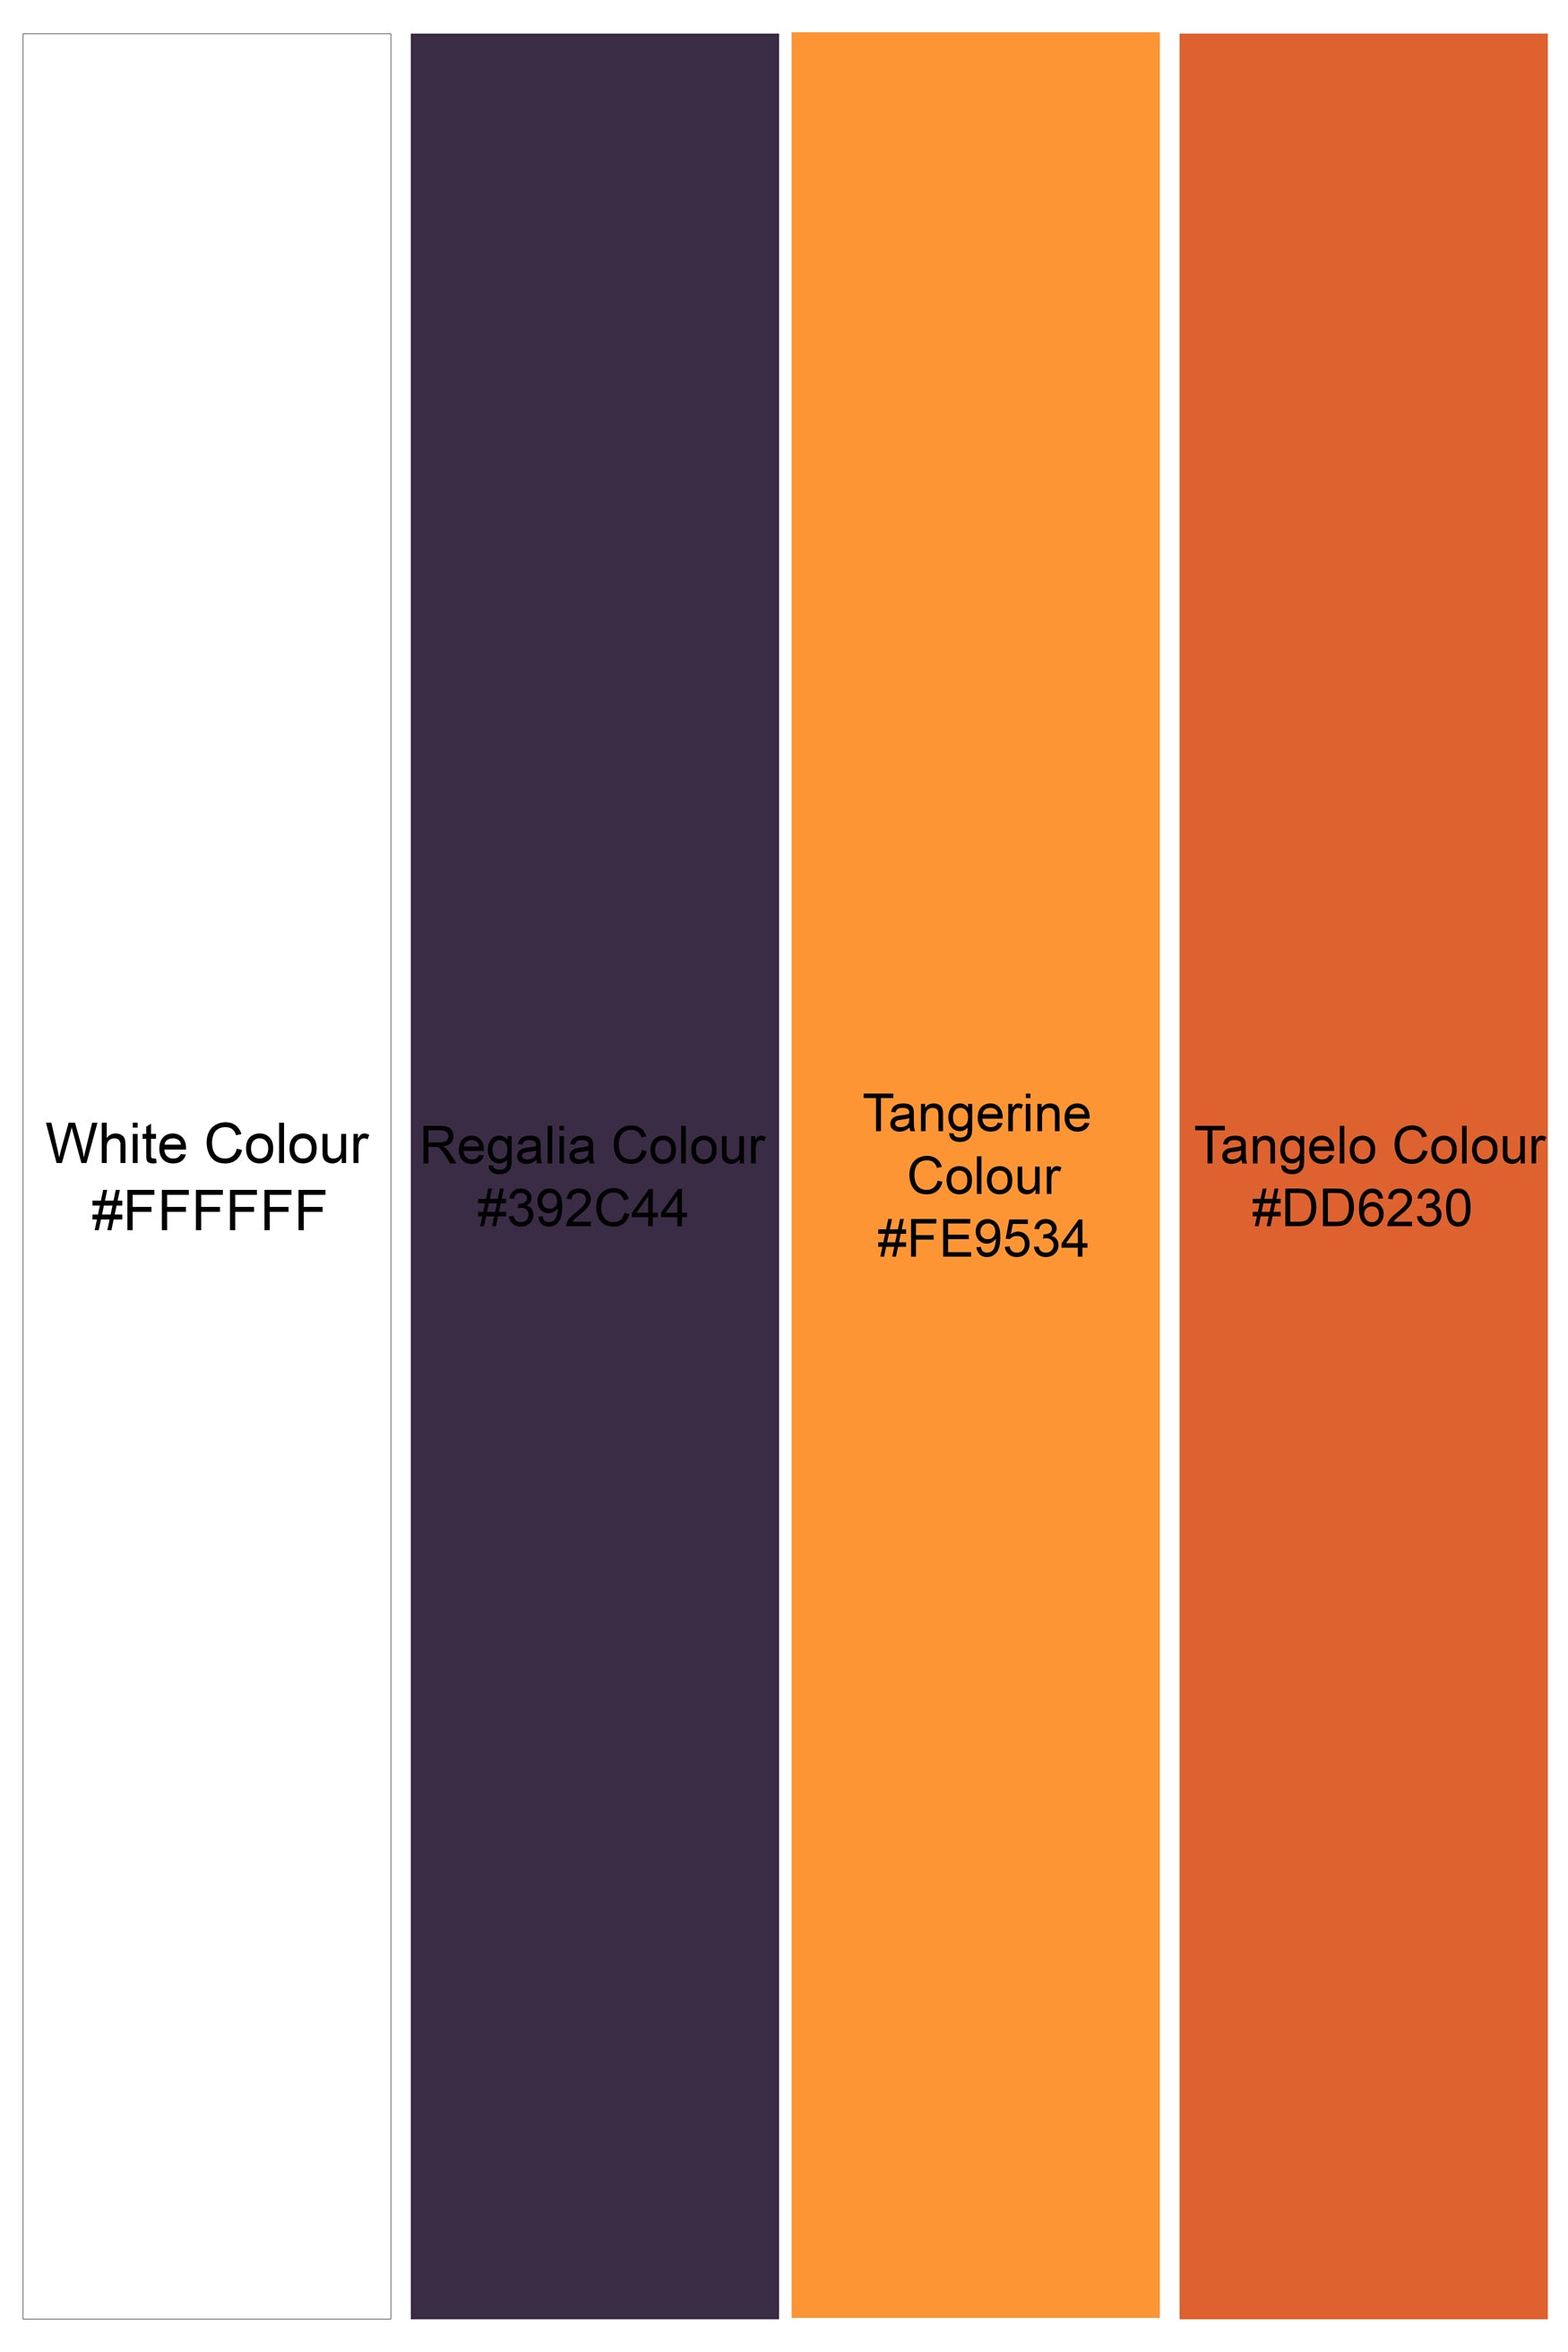 Bright White with Regalia Purple and Tangerine Orange Tigers and Trees Printed Subtle Sheen Super Soft Premium Cotton Designer Shirt 11947-38, 11947-H-38, 11947-39, 11947-H-39, 11947-40, 11947-H-40, 11947-42, 11947-H-42, 11947-44, 11947-H-44, 11947-46, 11947-H-46, 11947-48, 11947-H-48, 11947-50, 11947-H-50, 11947-52, 11947-H-52